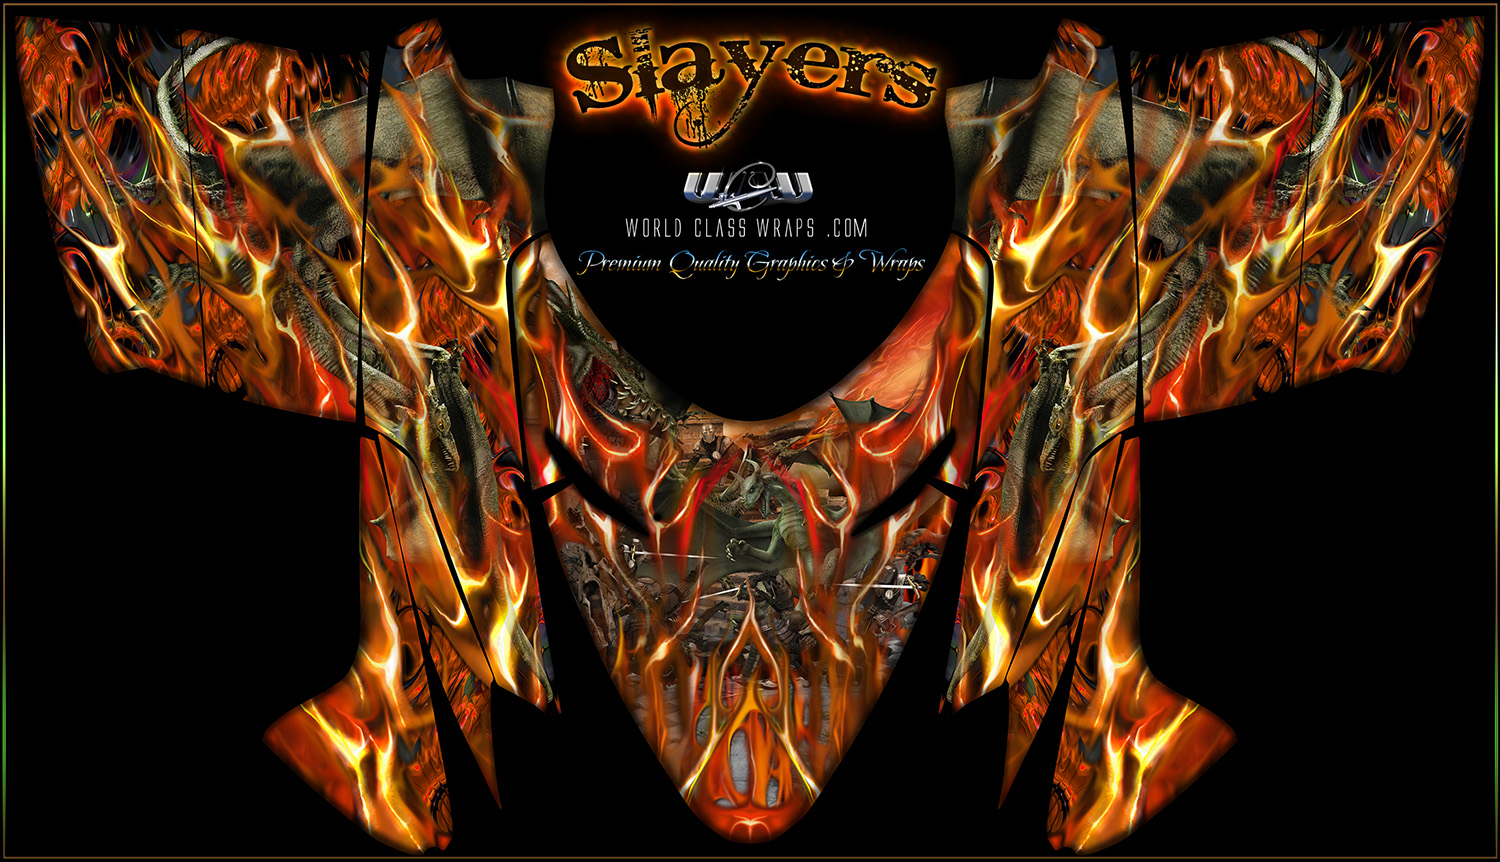 Slayers Polaris RMK dragon sled wrap